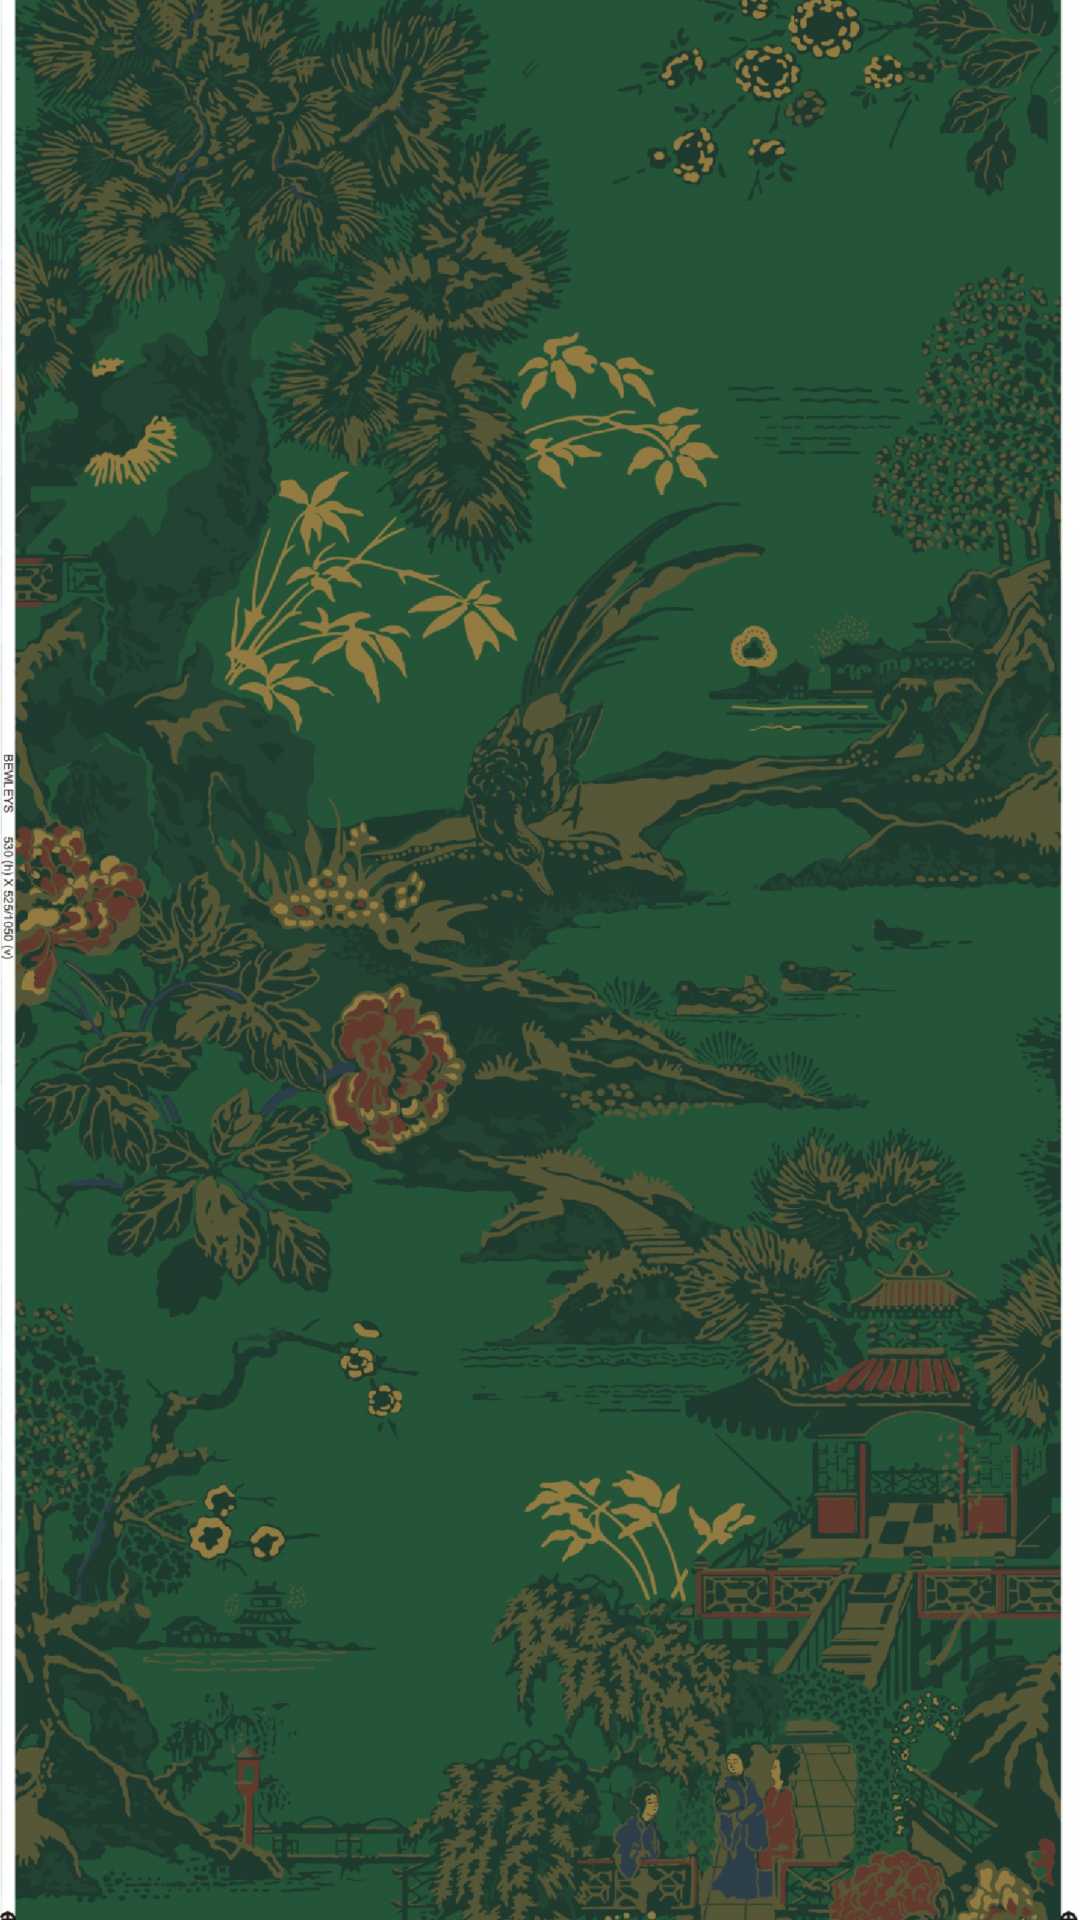 Sage Green Wallpaper 1